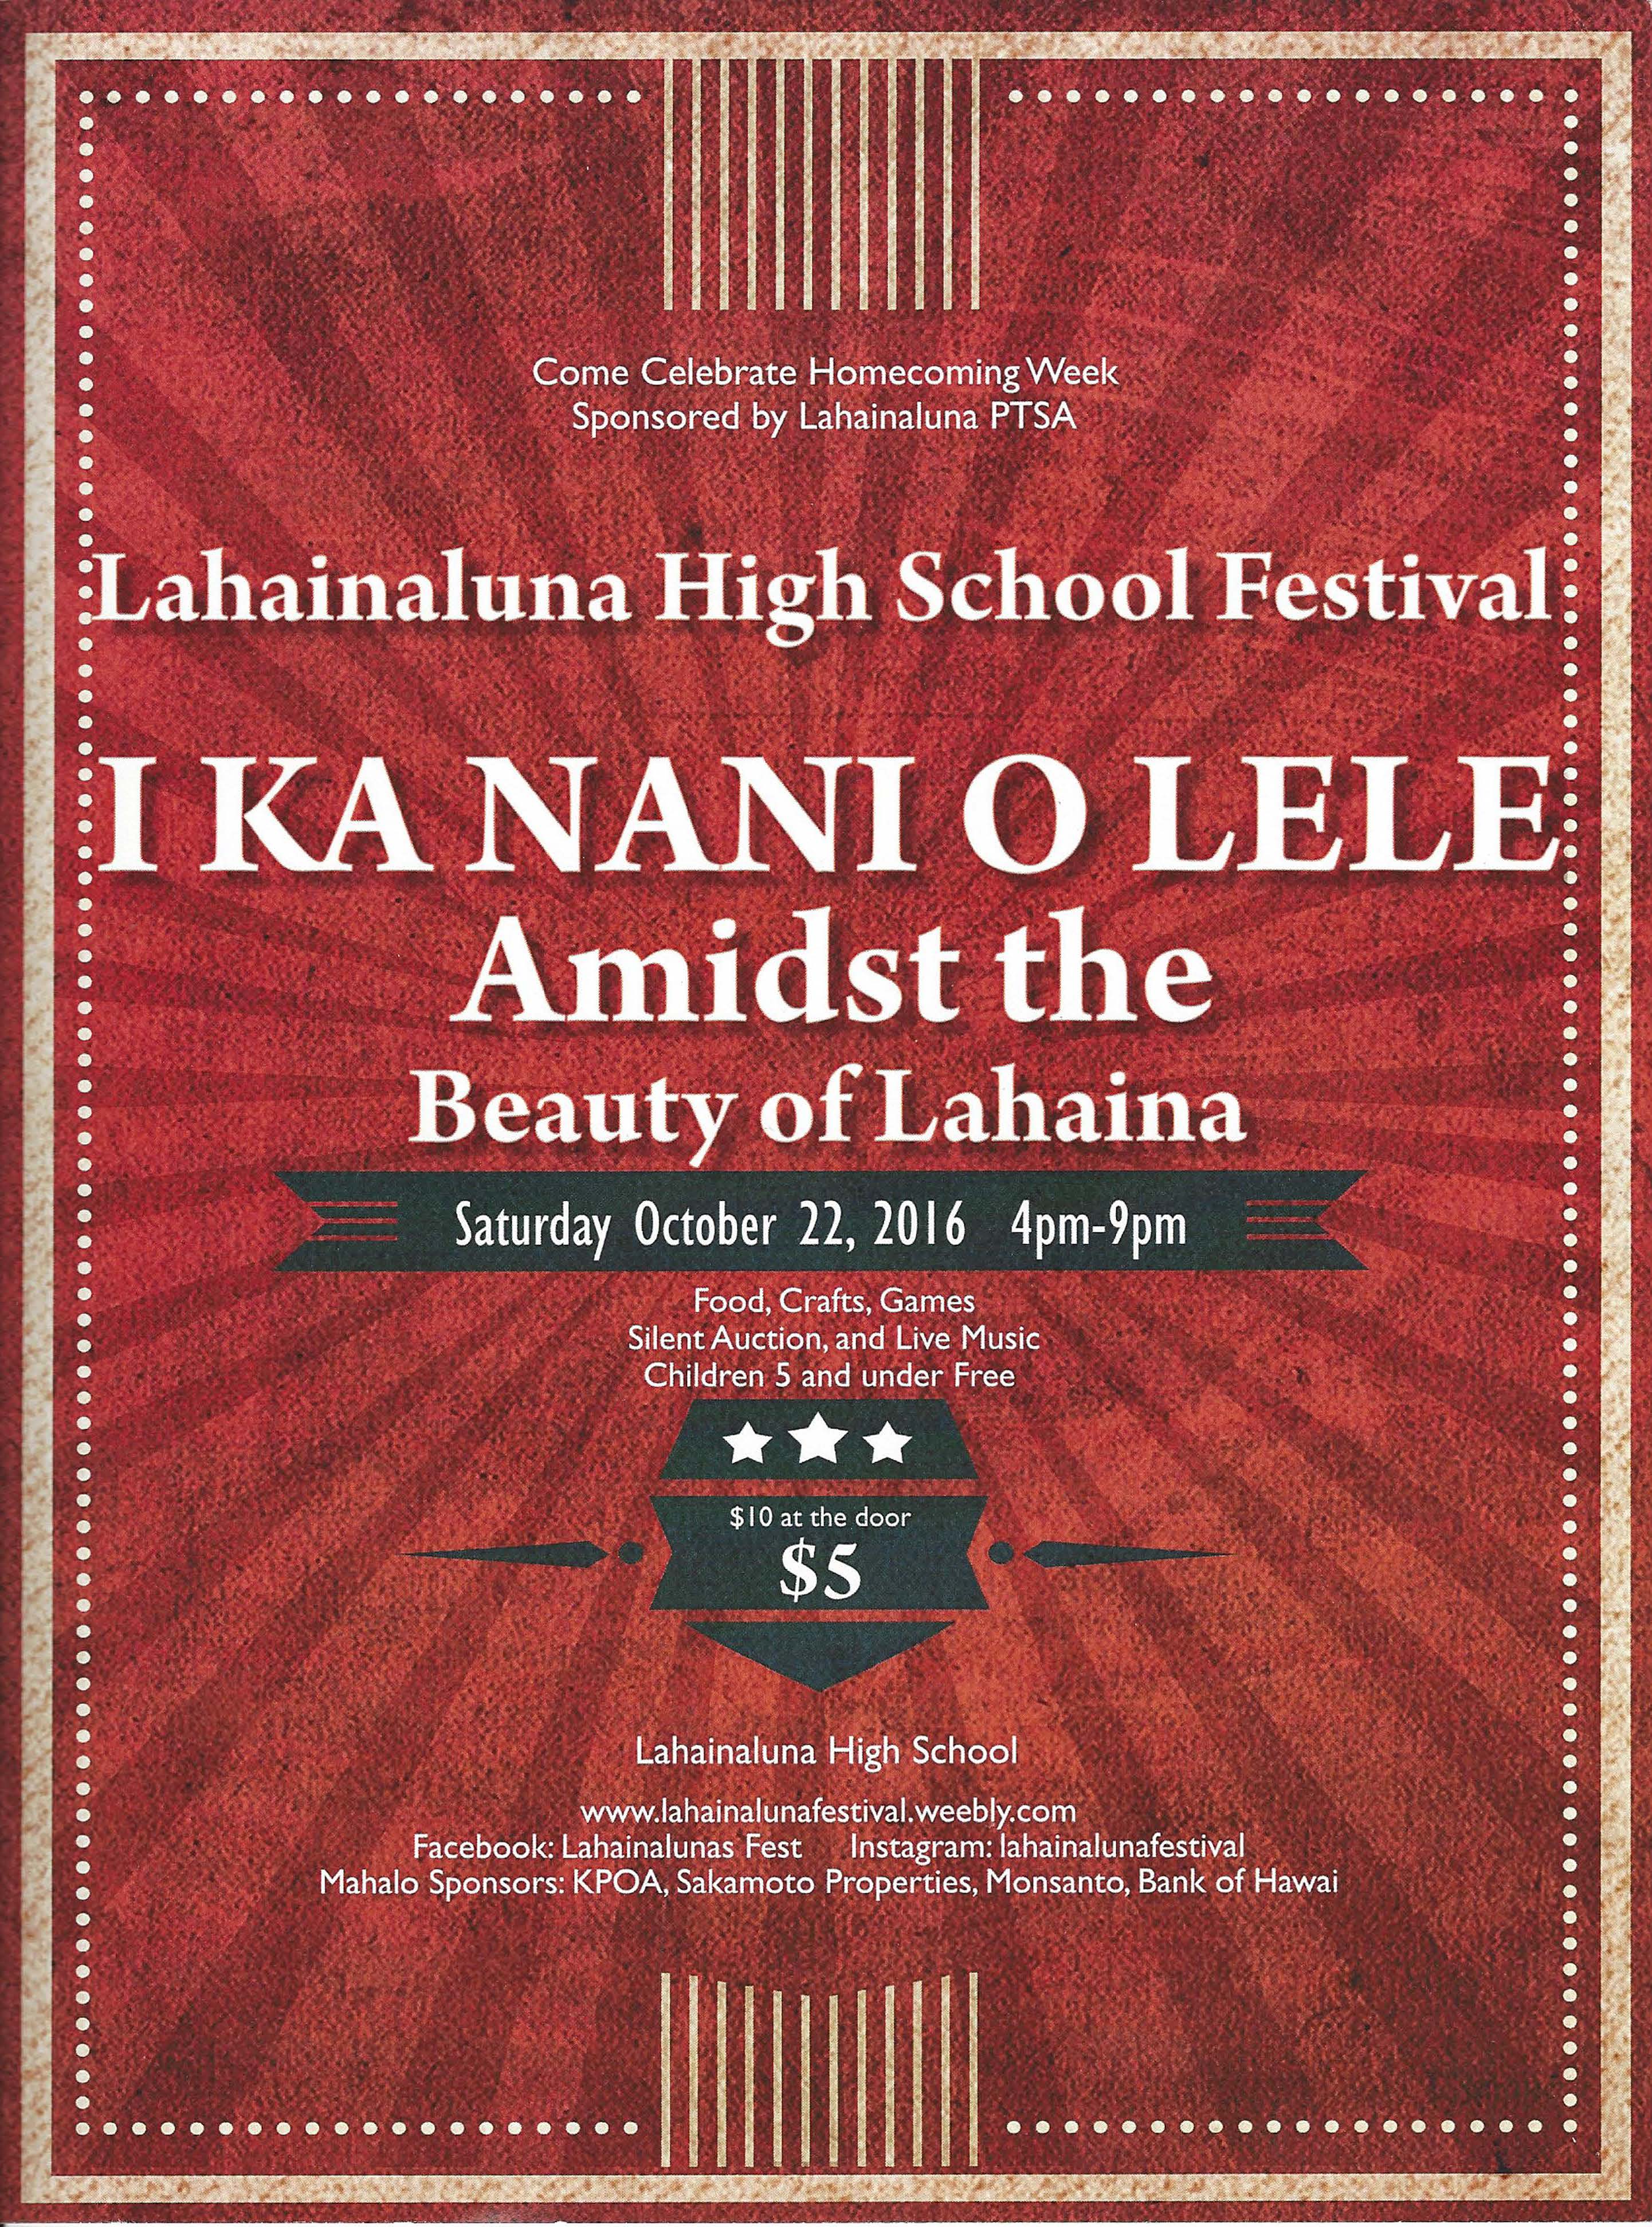 Lahainaluna Festival event flyer.